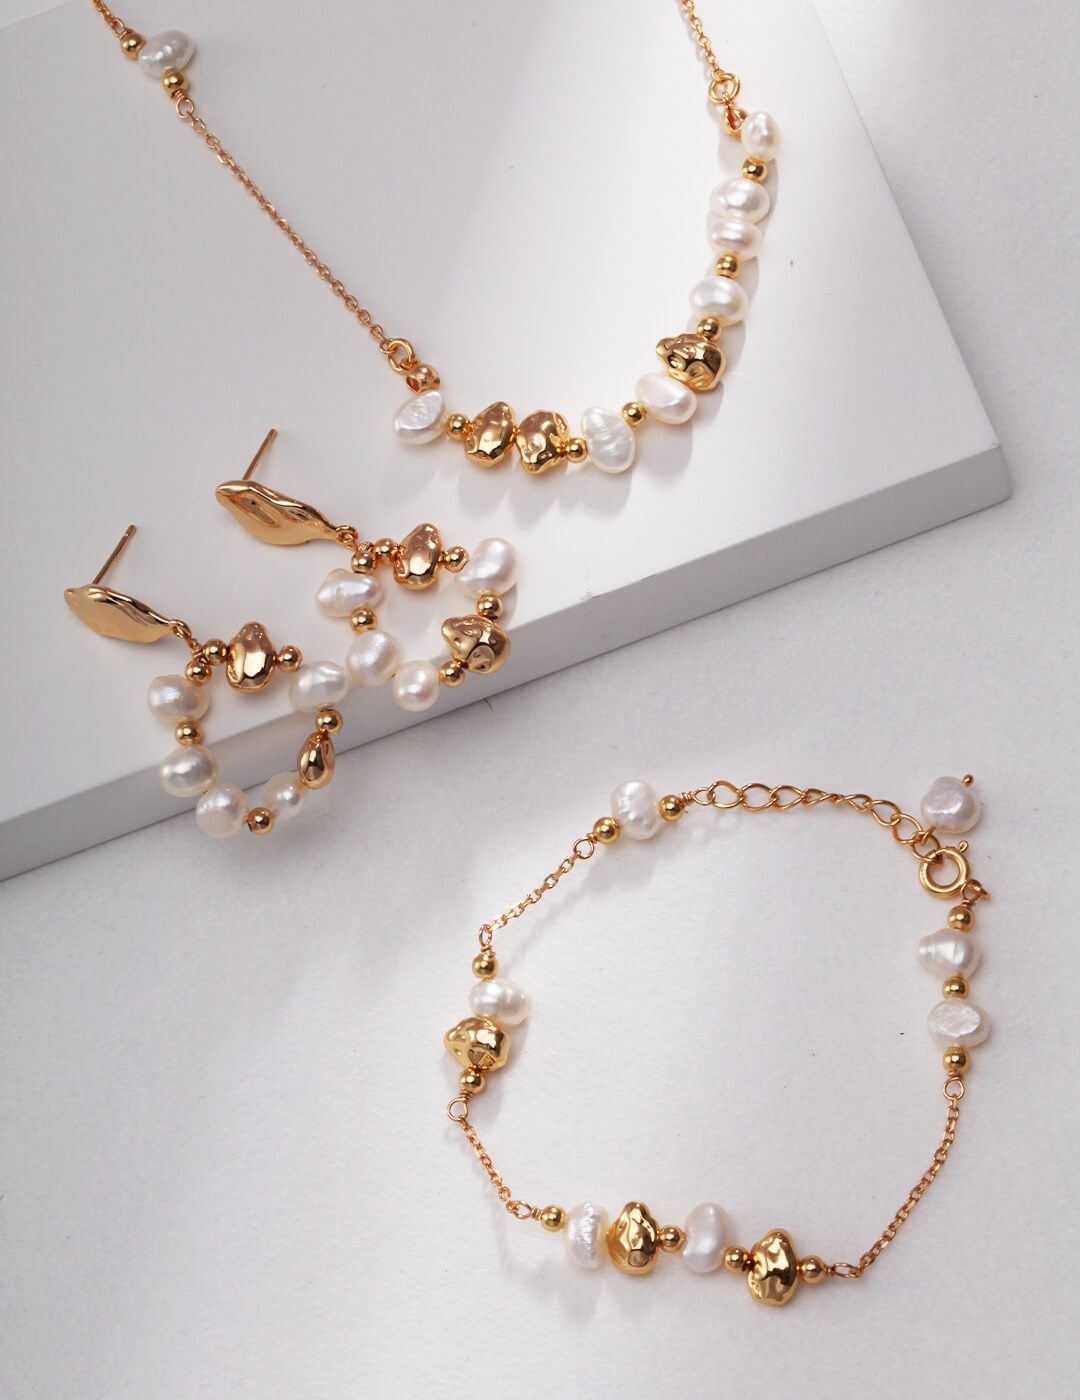 Alberta Baroque Pearl and Irregular Gold Ball Earrings